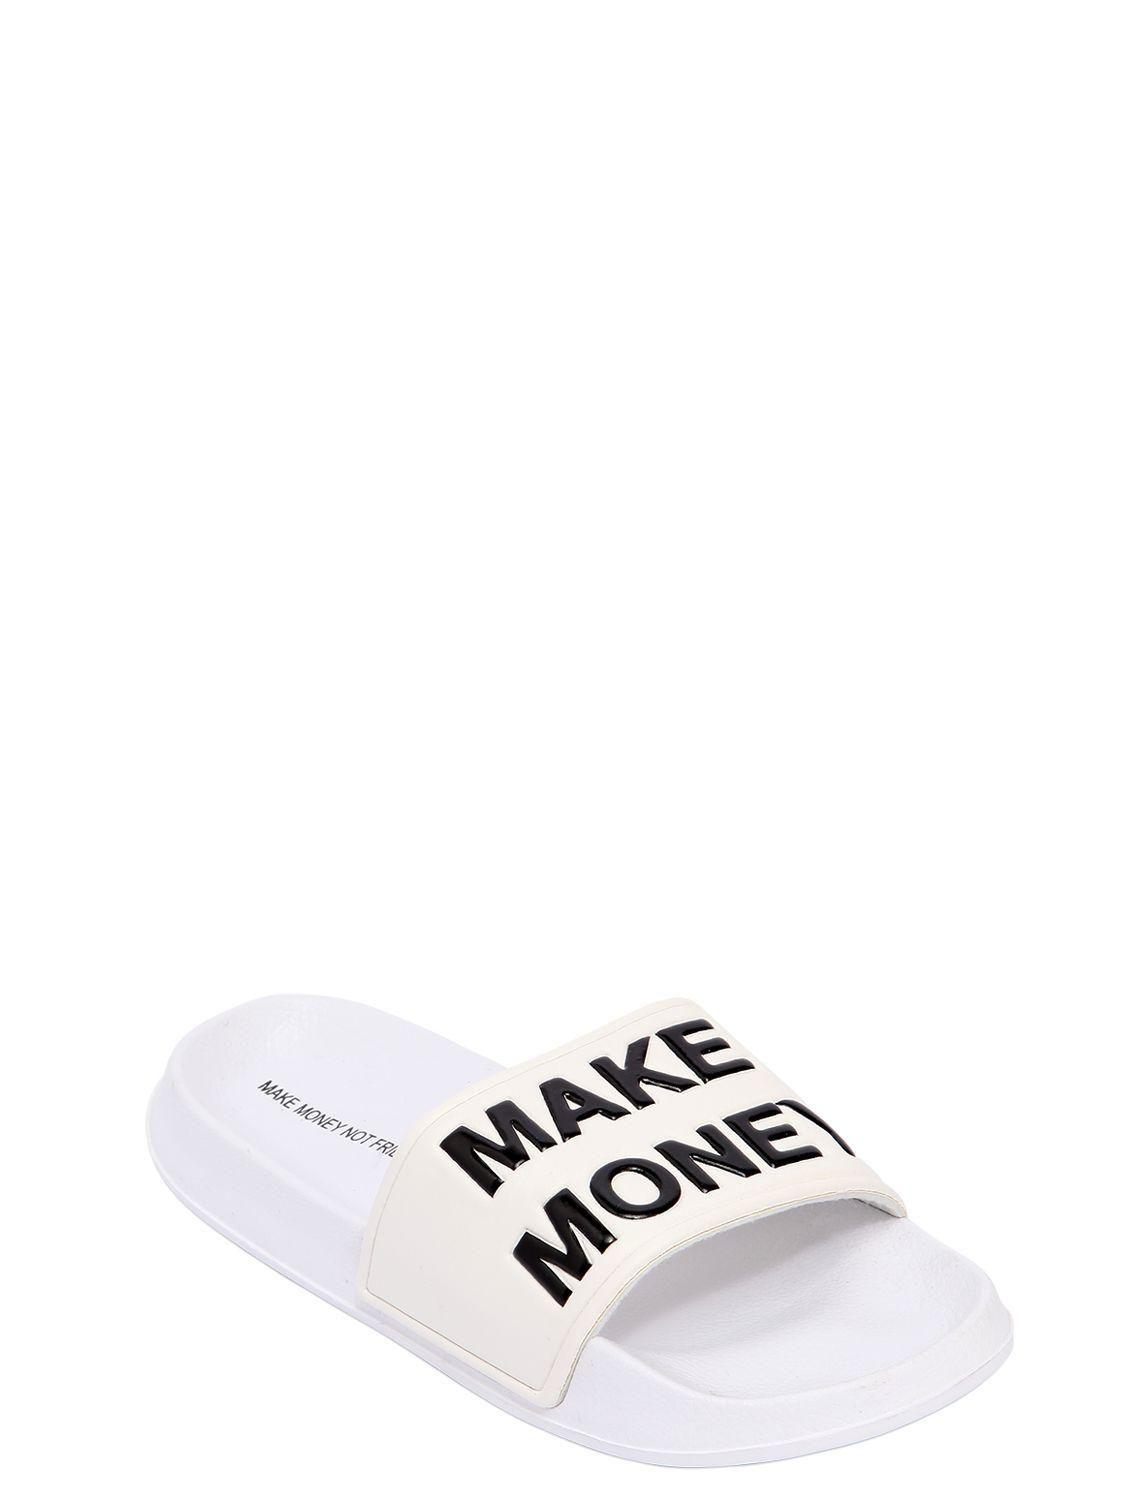 Black and White Friends Logo - Make Money Not Friends Logo Slide Sandals in White - Lyst